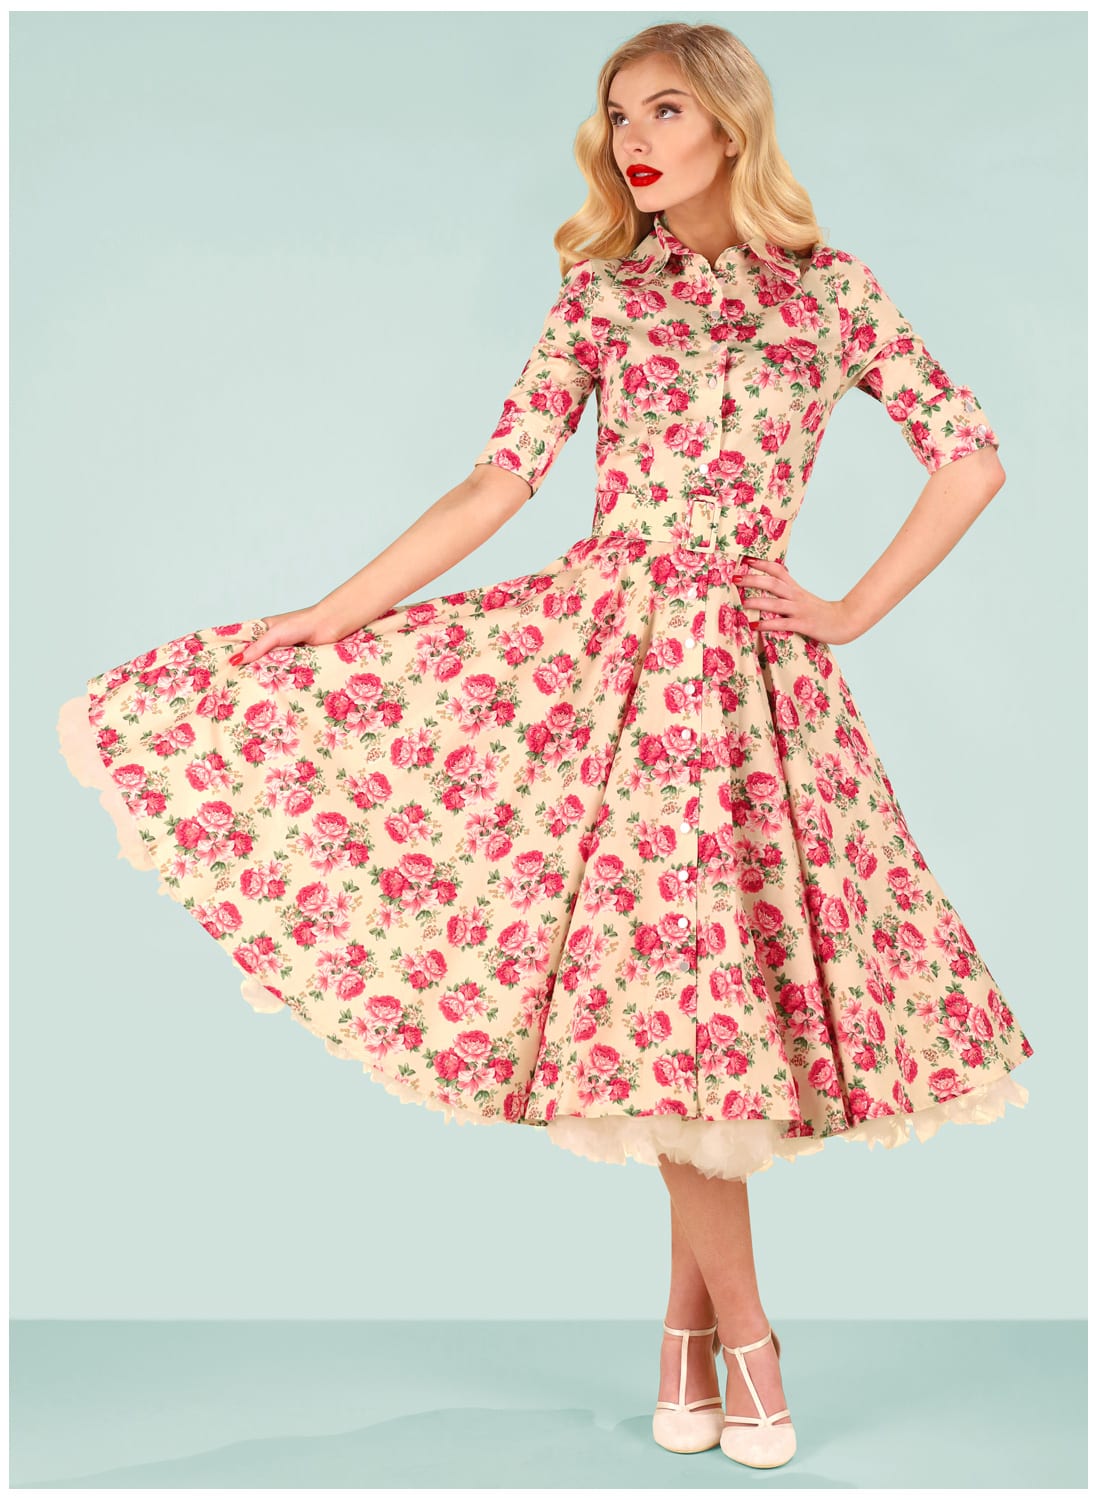 floral swing dress